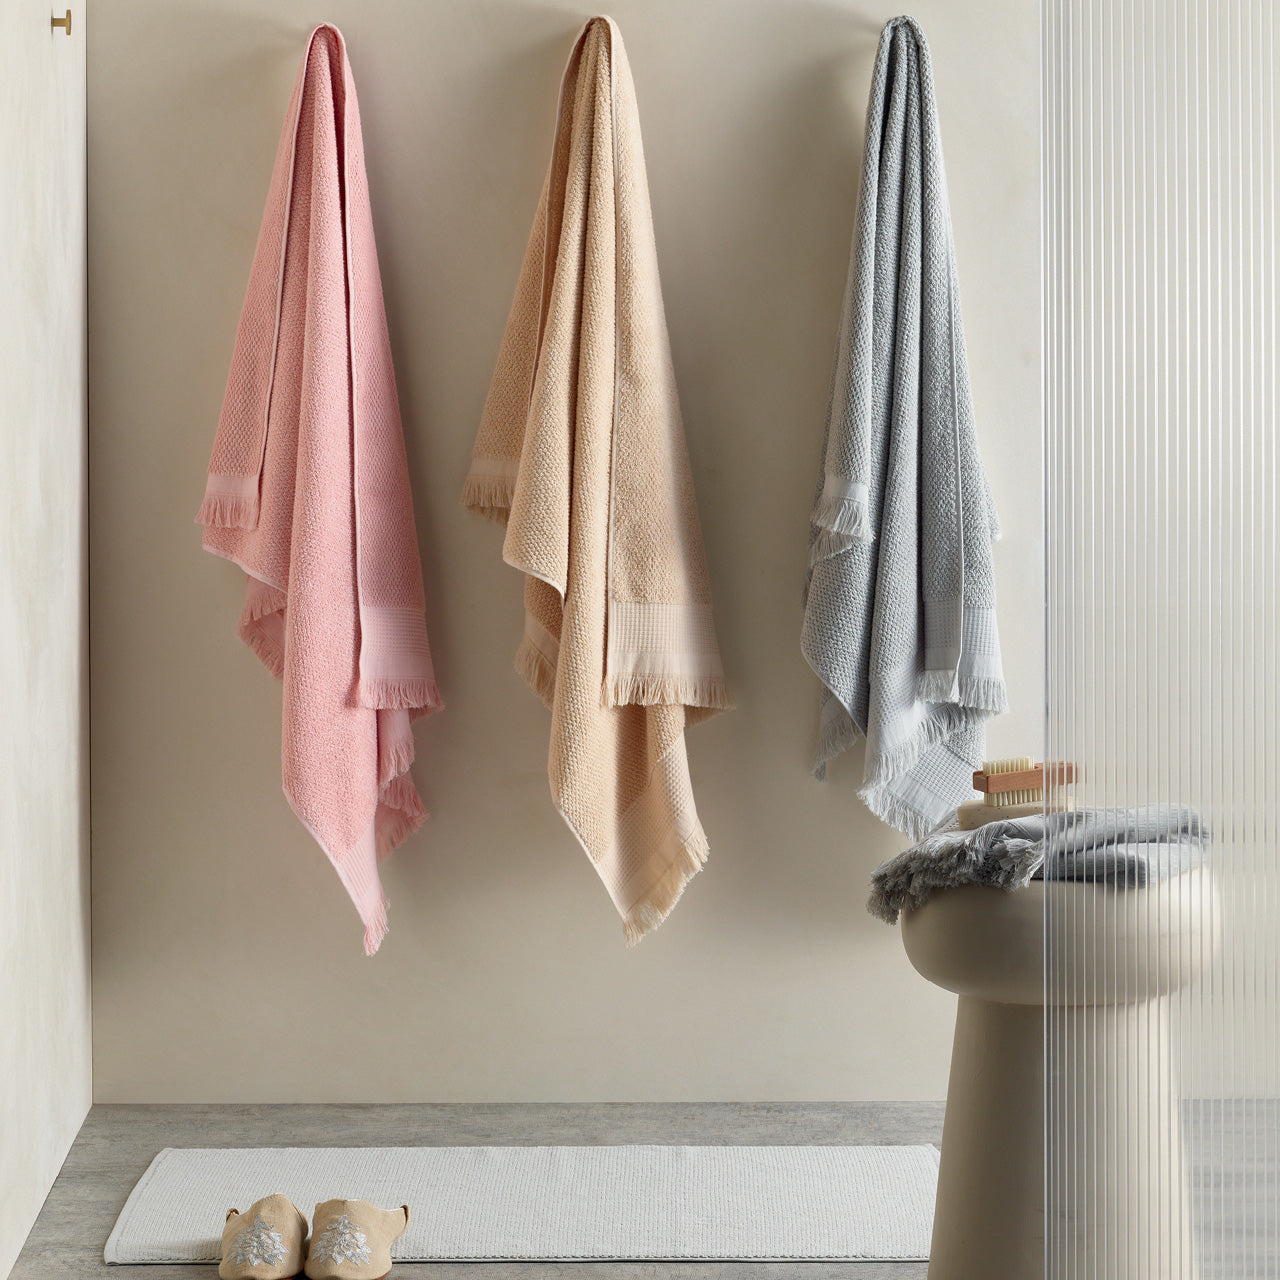 Lifestyle shot of Izmir Towels hanging in bathroom